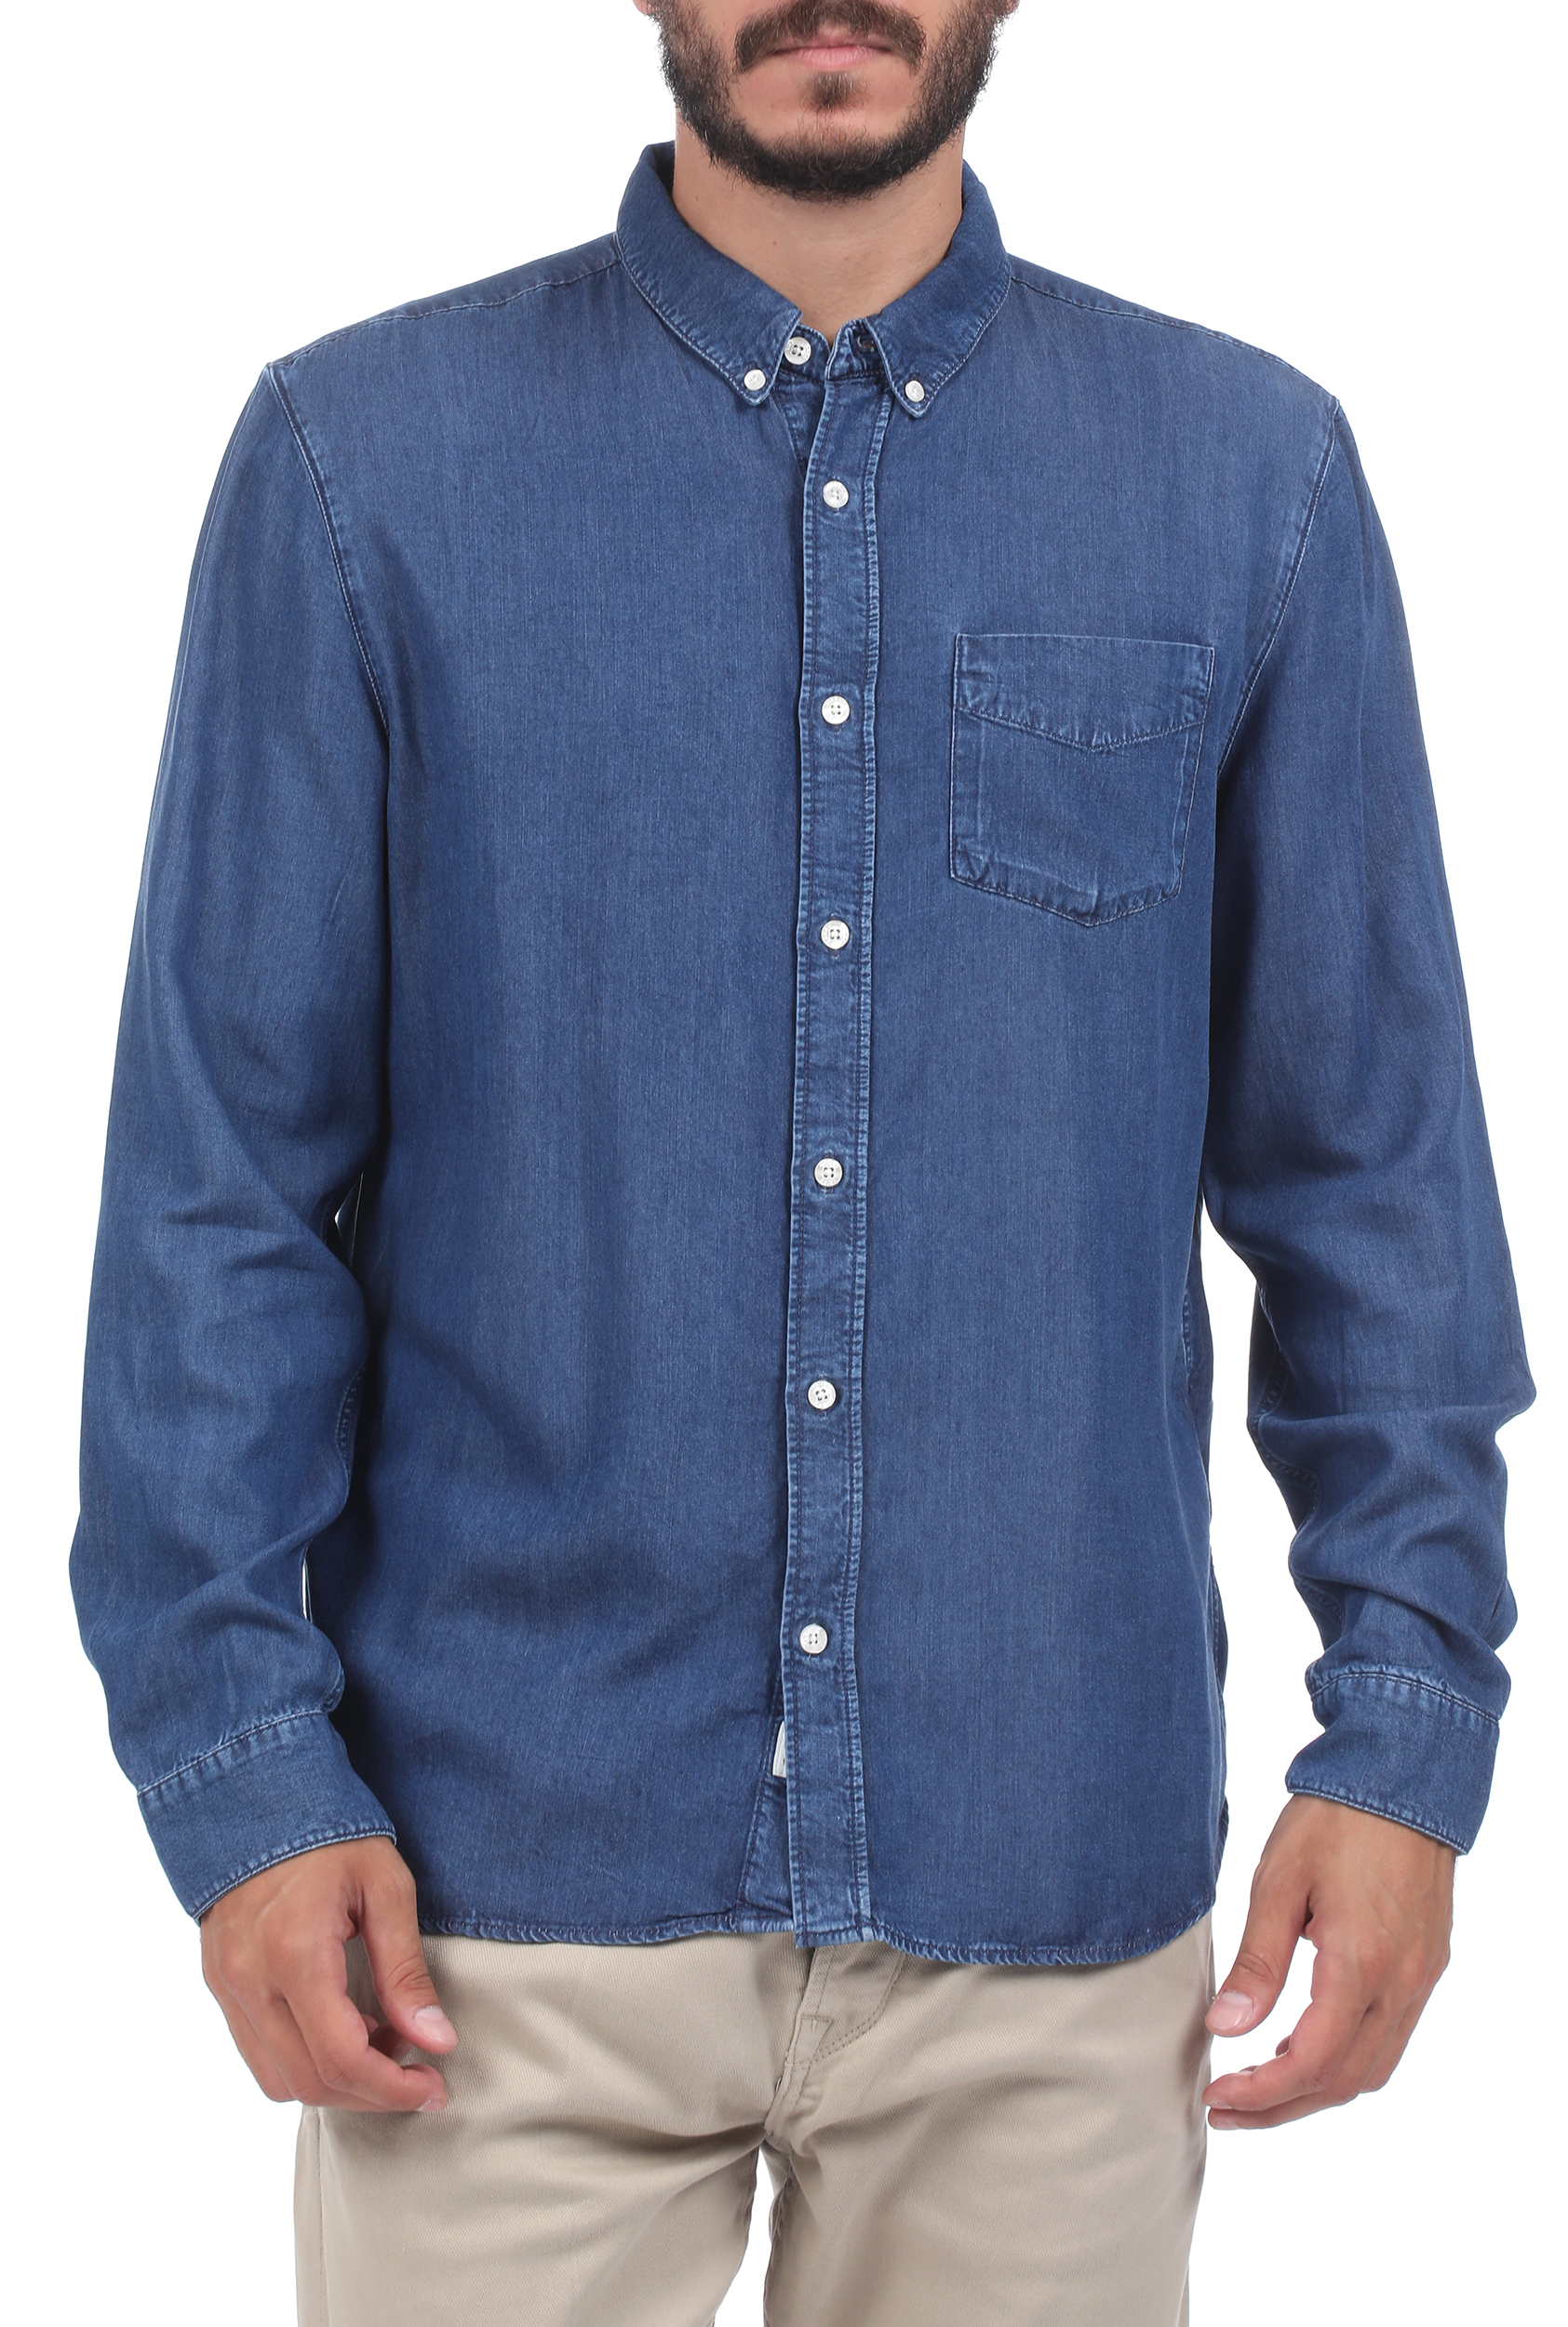 GABBA – Ανδρικό denim πουκάμισο GABBA Ranger μπλε 1809756.0-0107